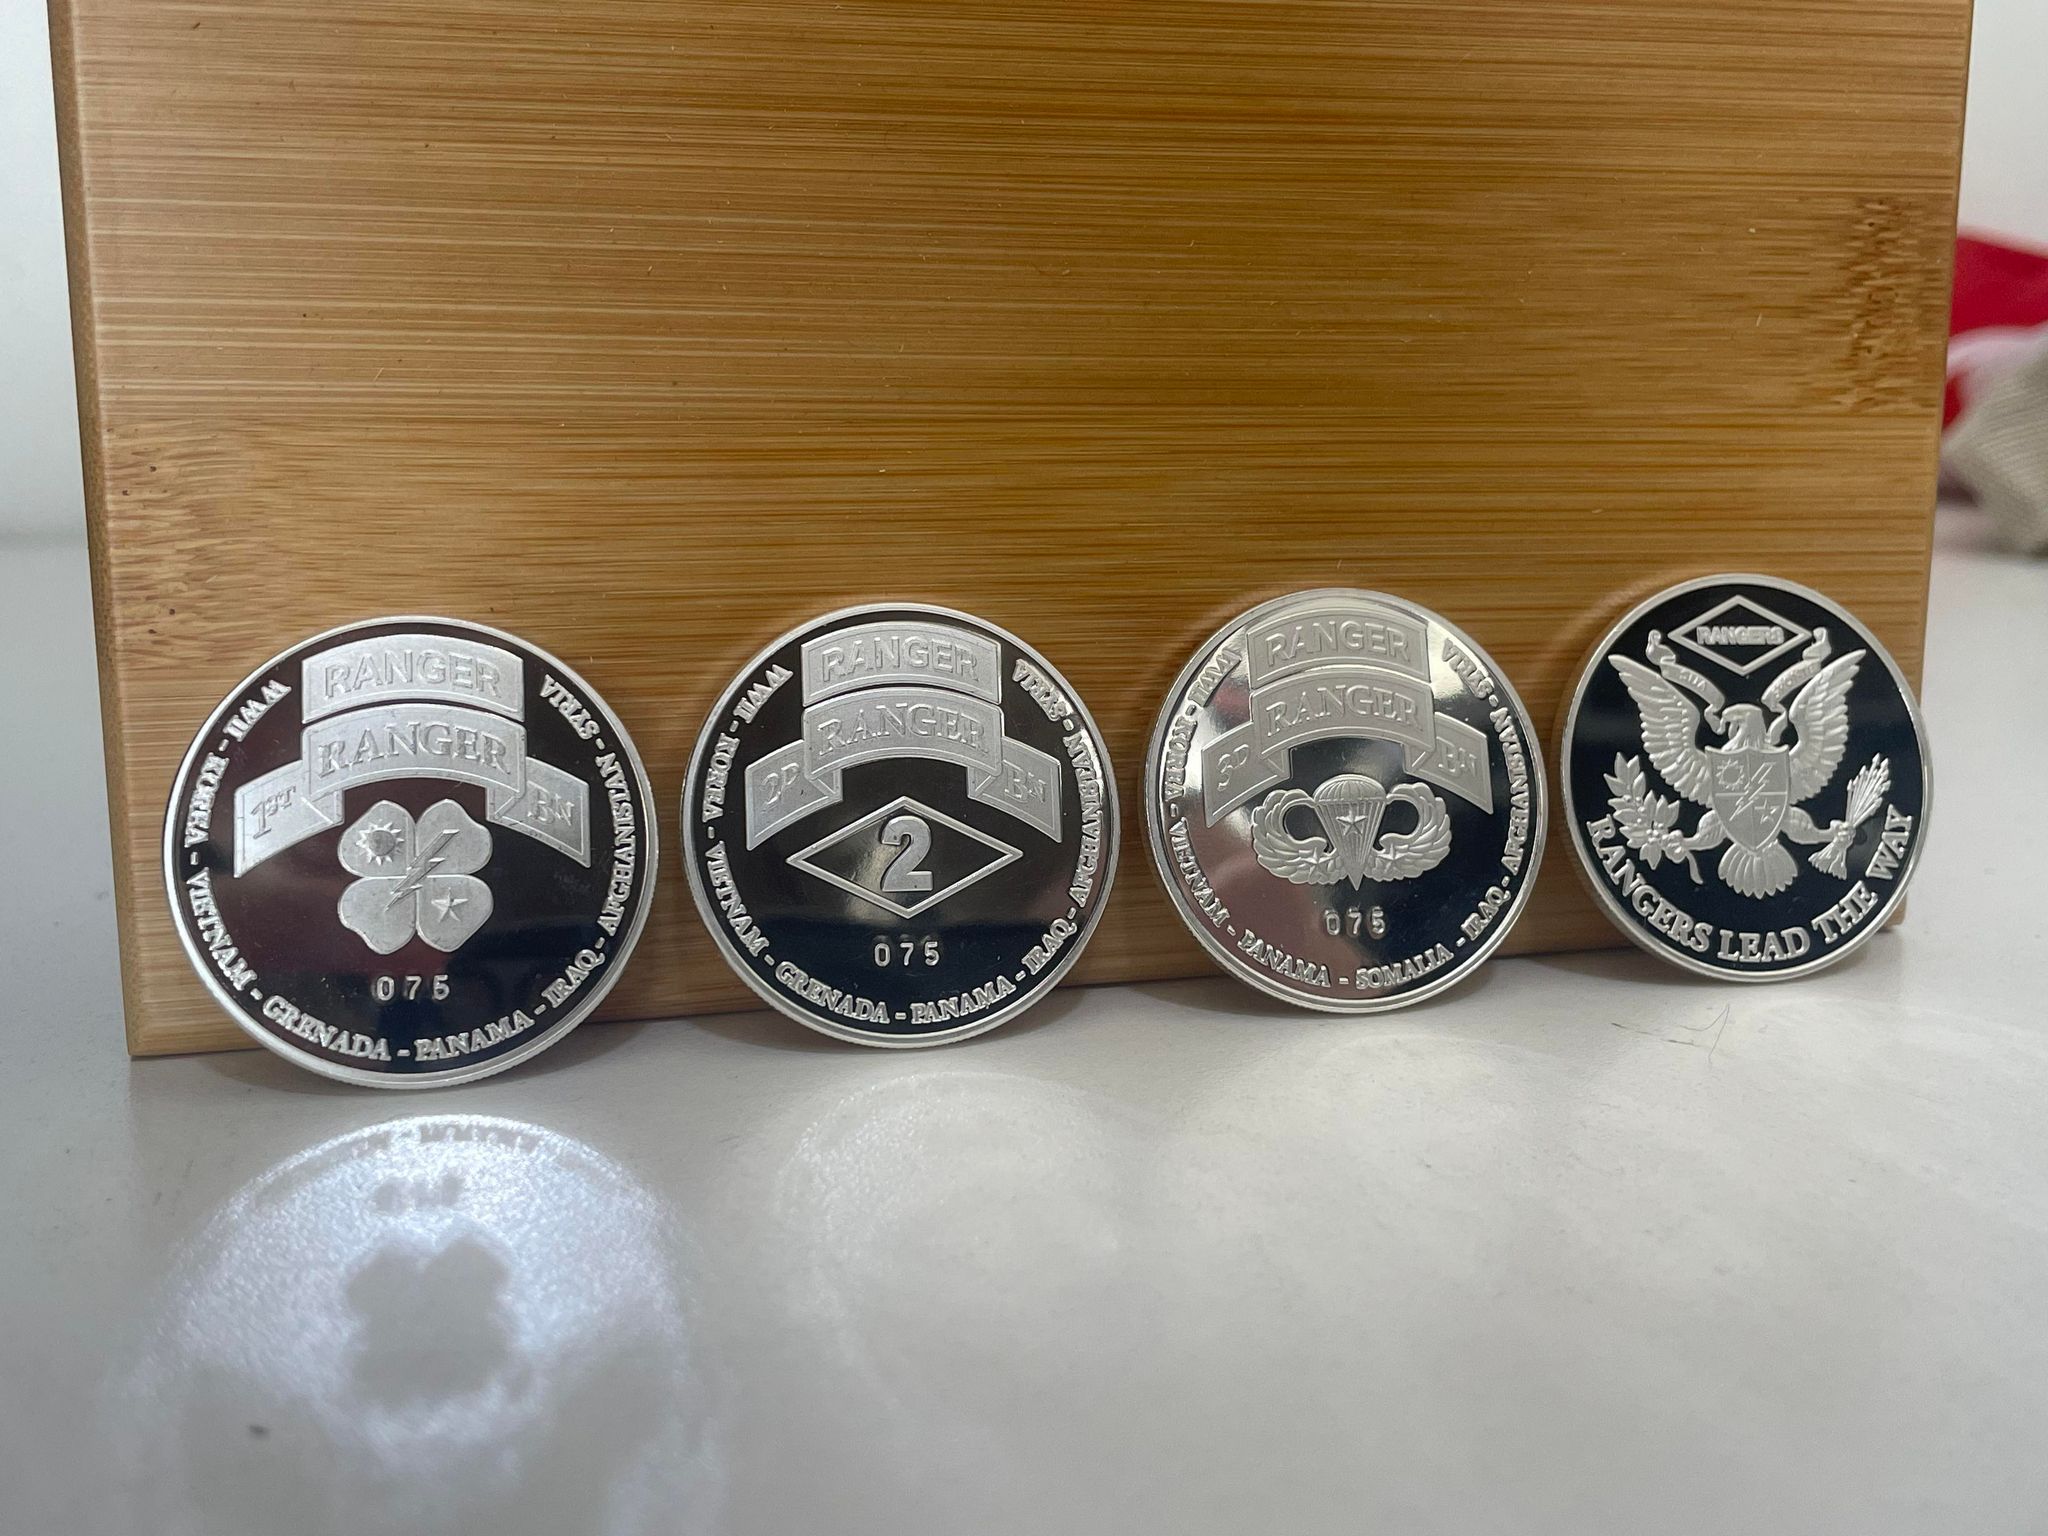 Ranger Battalion Collectors Coin